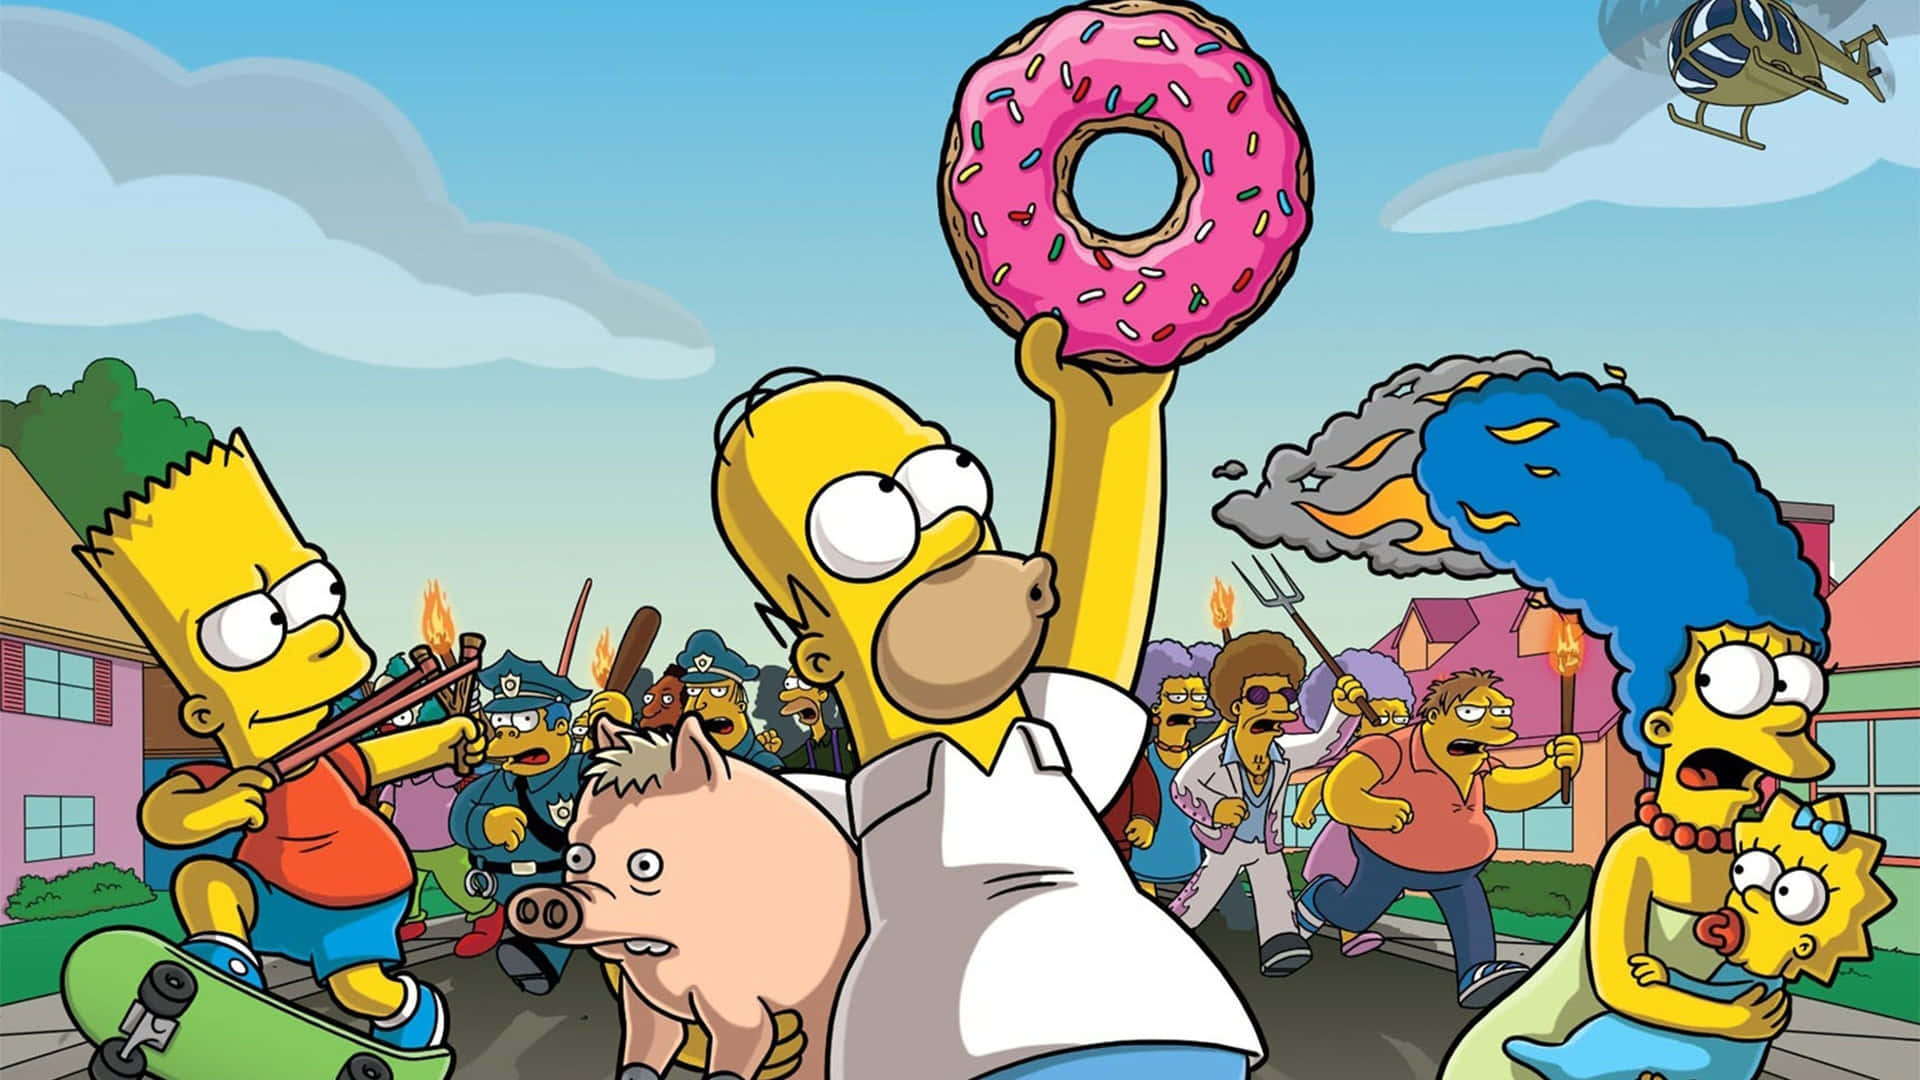 Let’s enjoy a marathon of The Simpsons on a PC Wallpaper